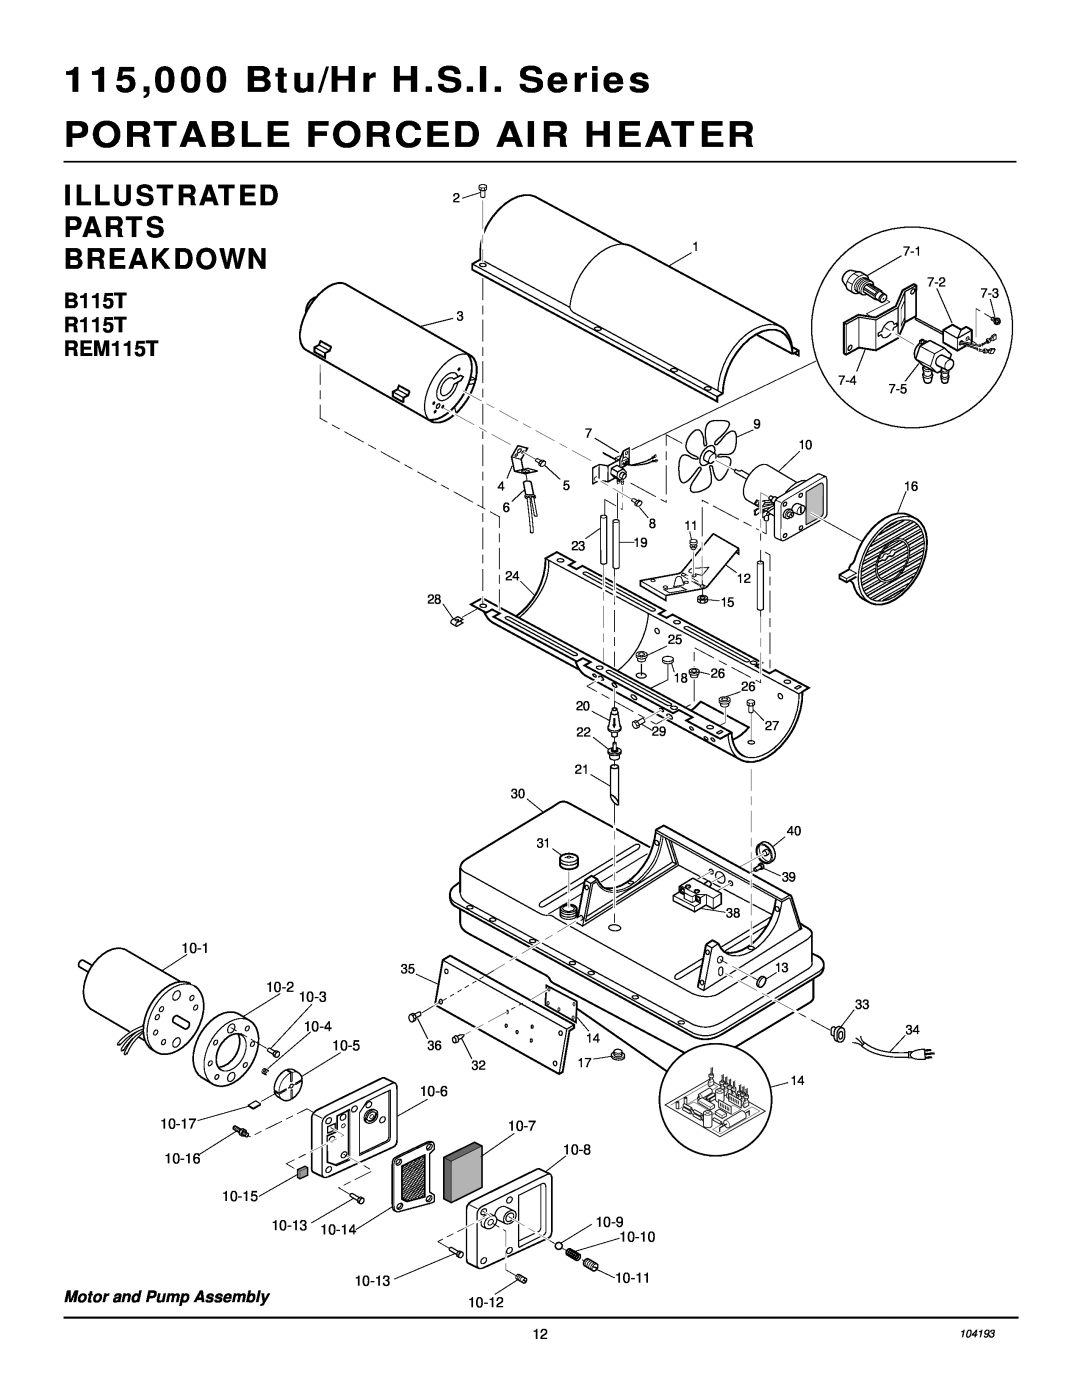 Desa Illustrated Parts Breakdown, B115T R115T REM115T, 115,000 Btu/Hr H.S.I. Series, Portable Forced Air Heater, 10-1 